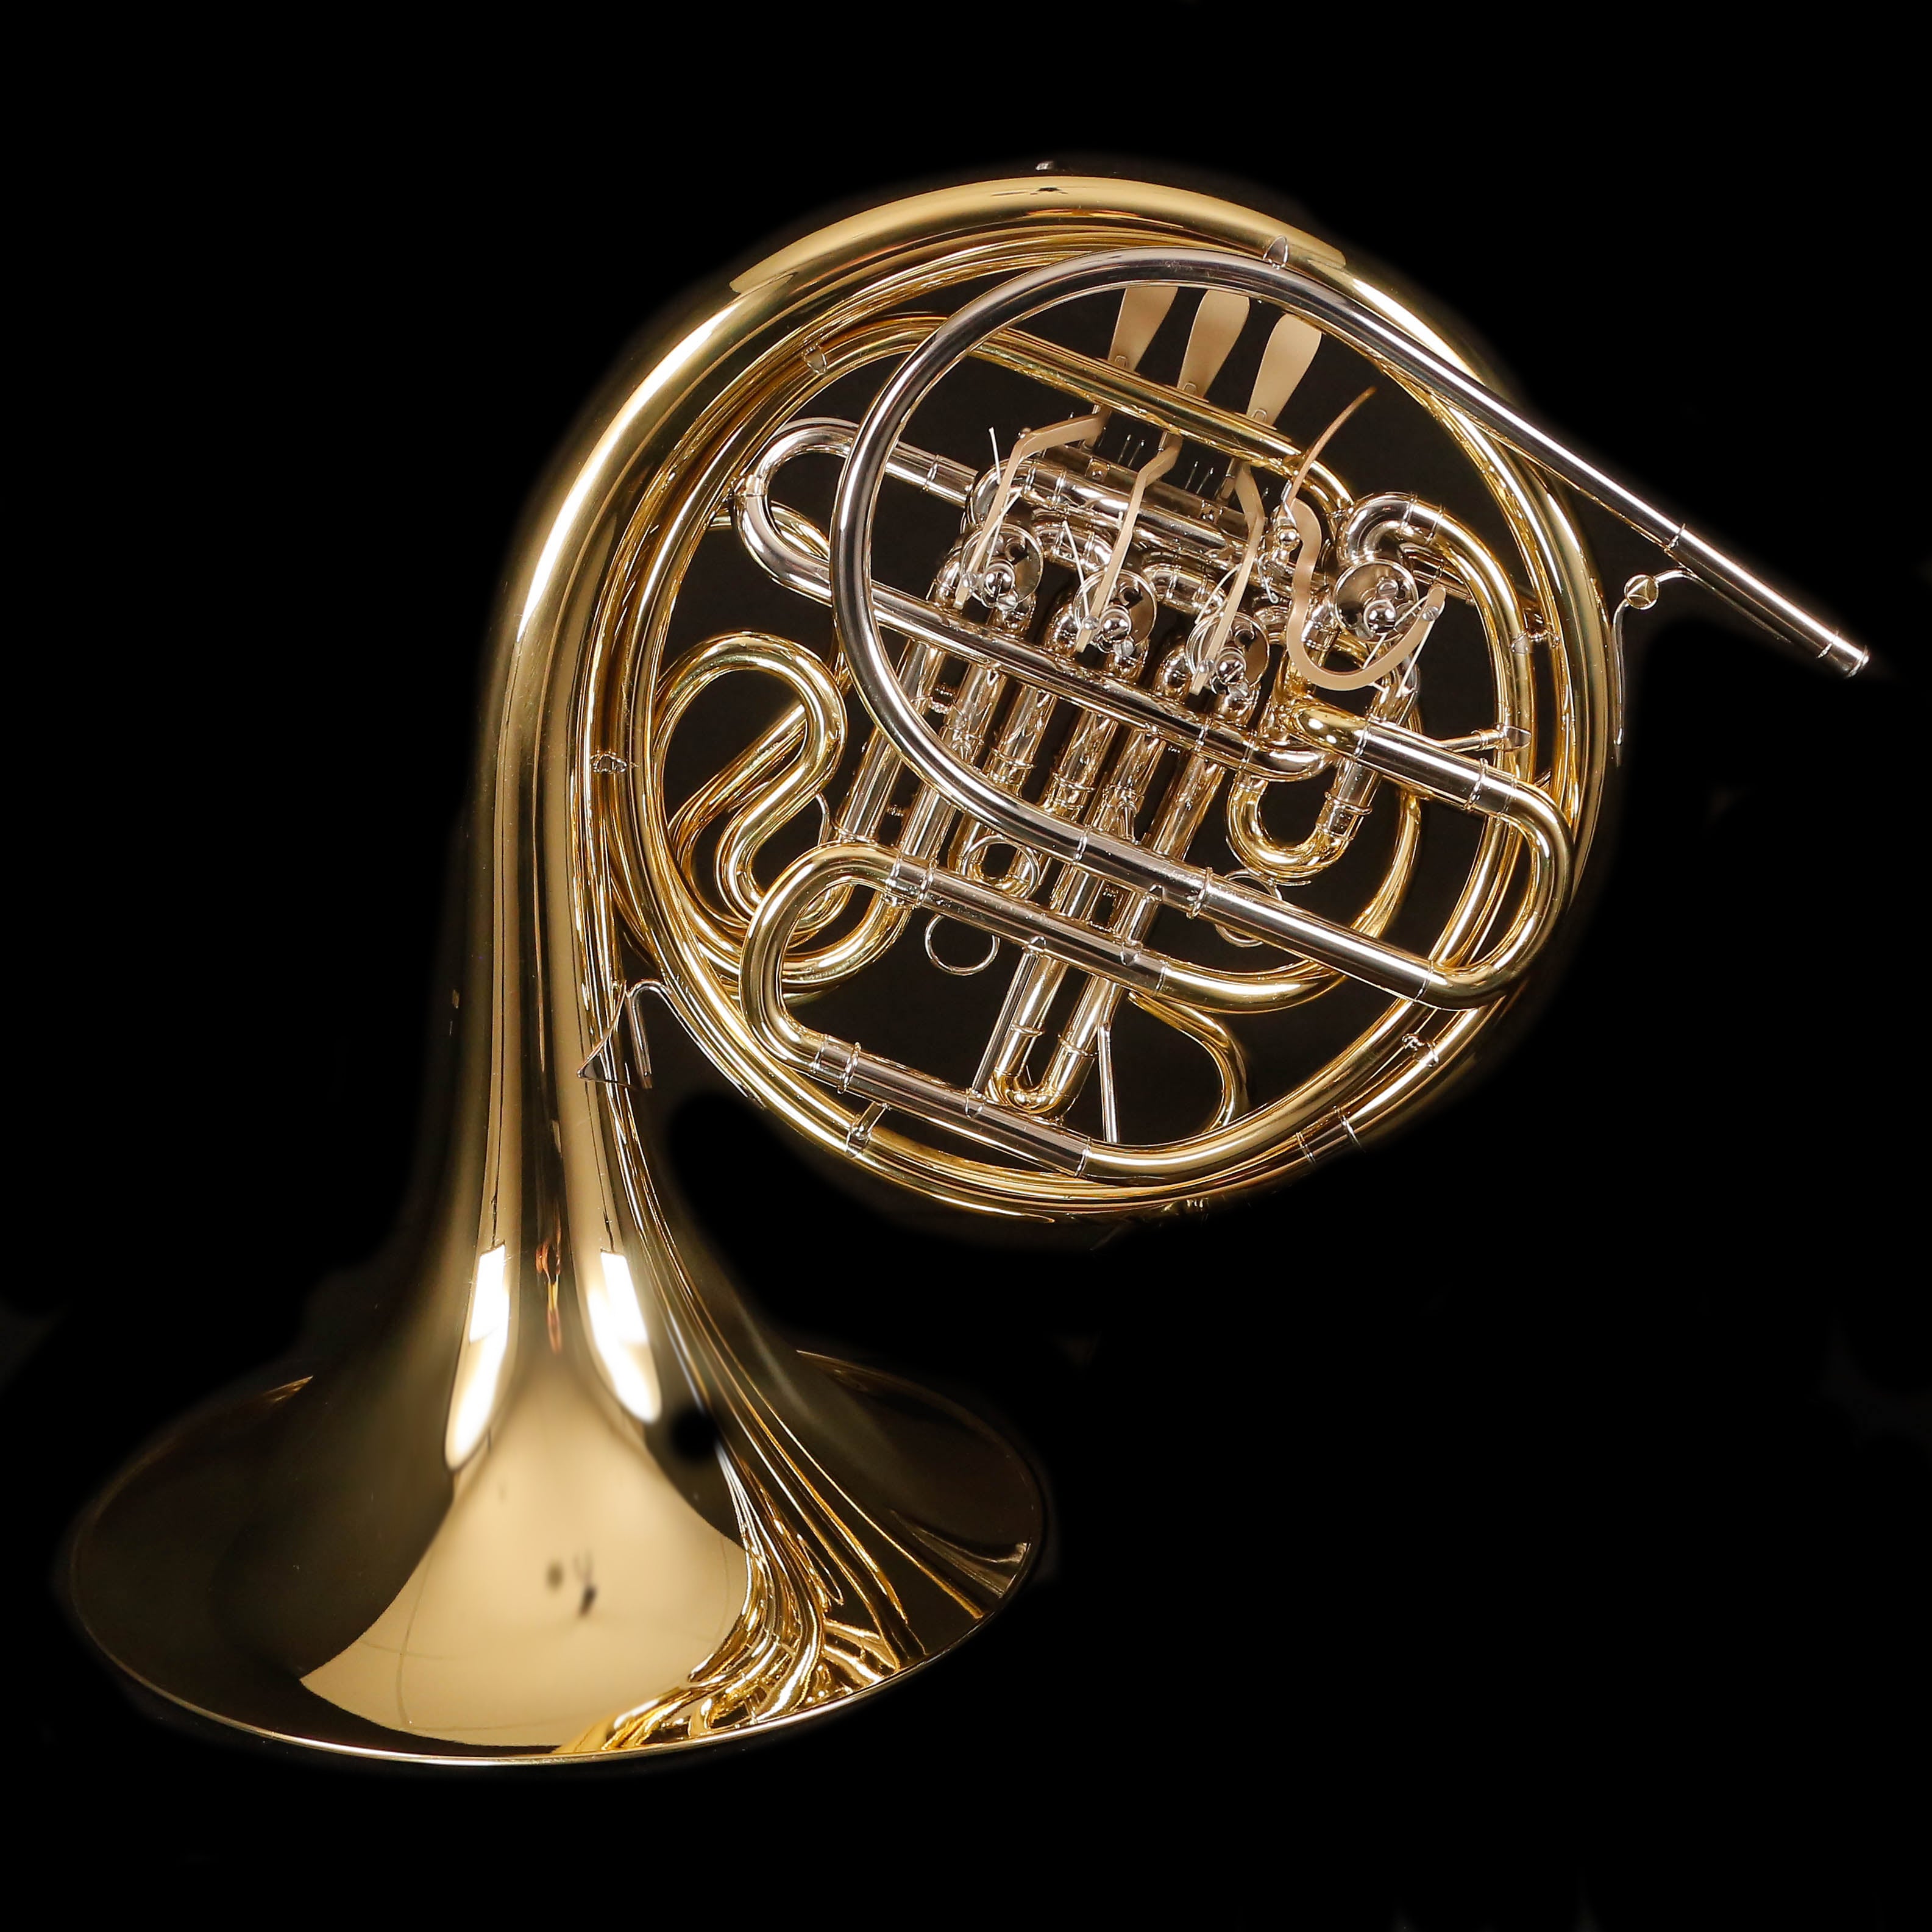 Holton H378ERA Double French Horn - Step-Up Adjustable Fingerhook